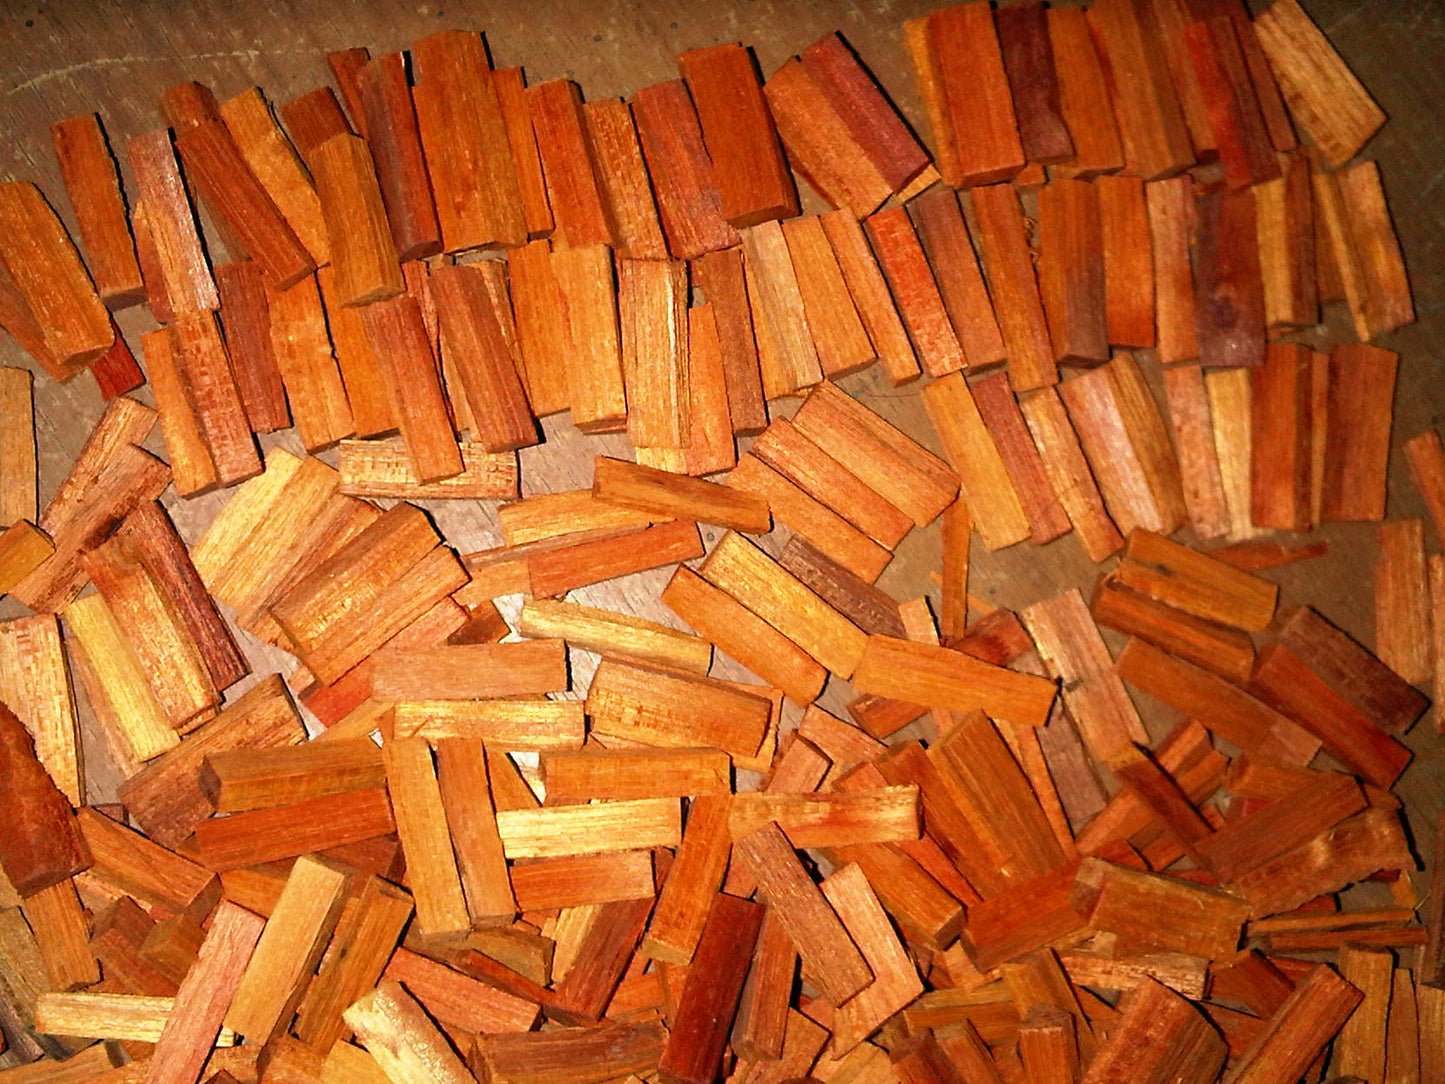 Sappan wood